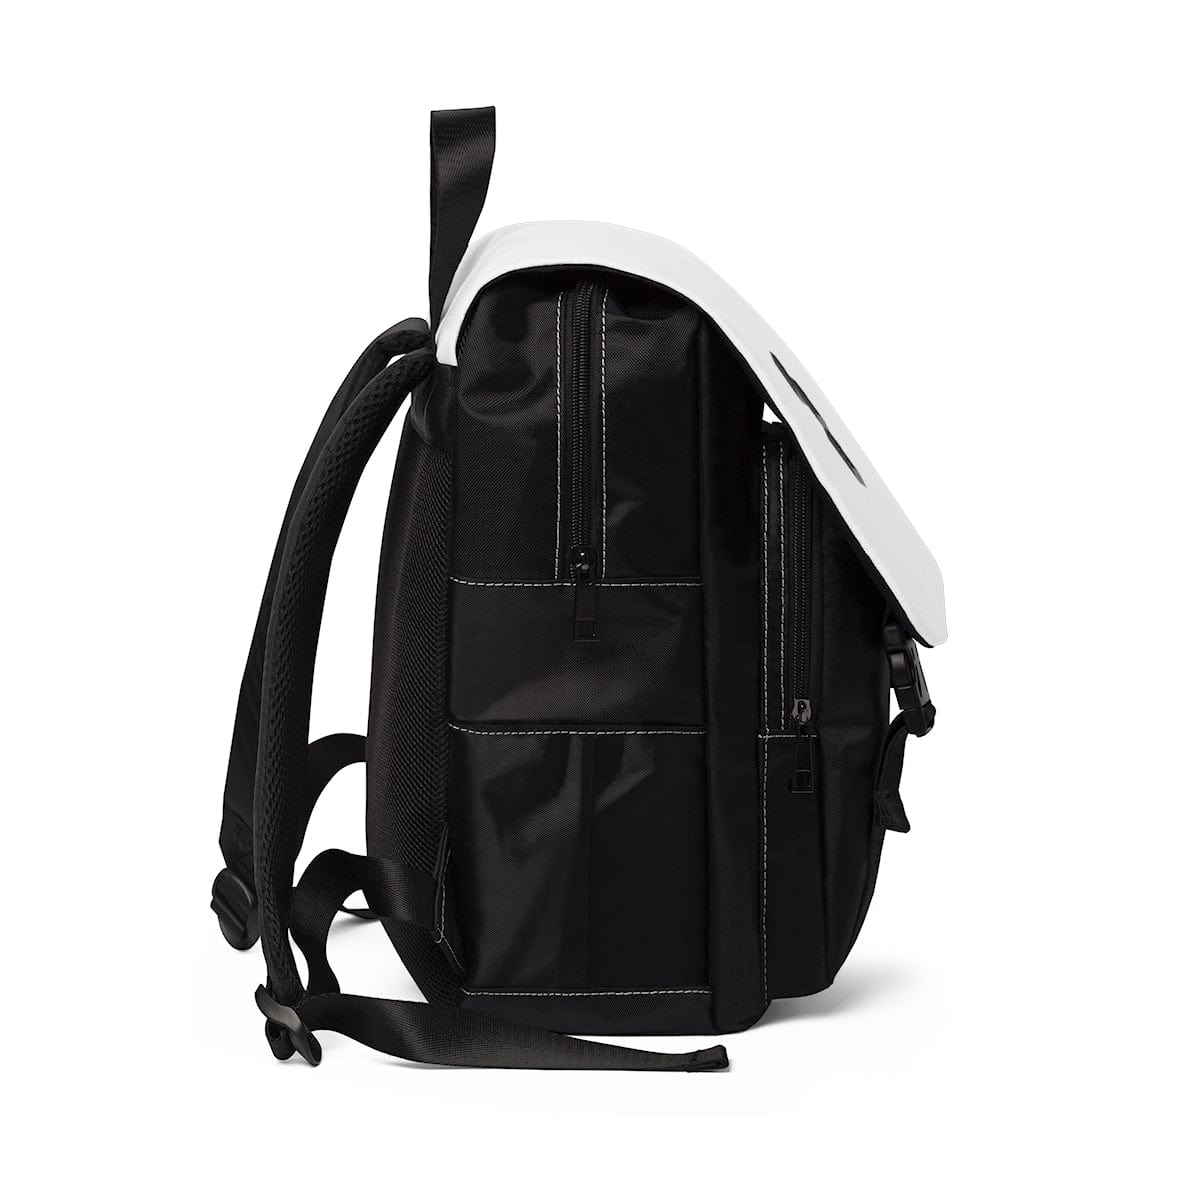 zk Importers LV Lvv backpack unisex 5 L Backpack Brown - Price in India